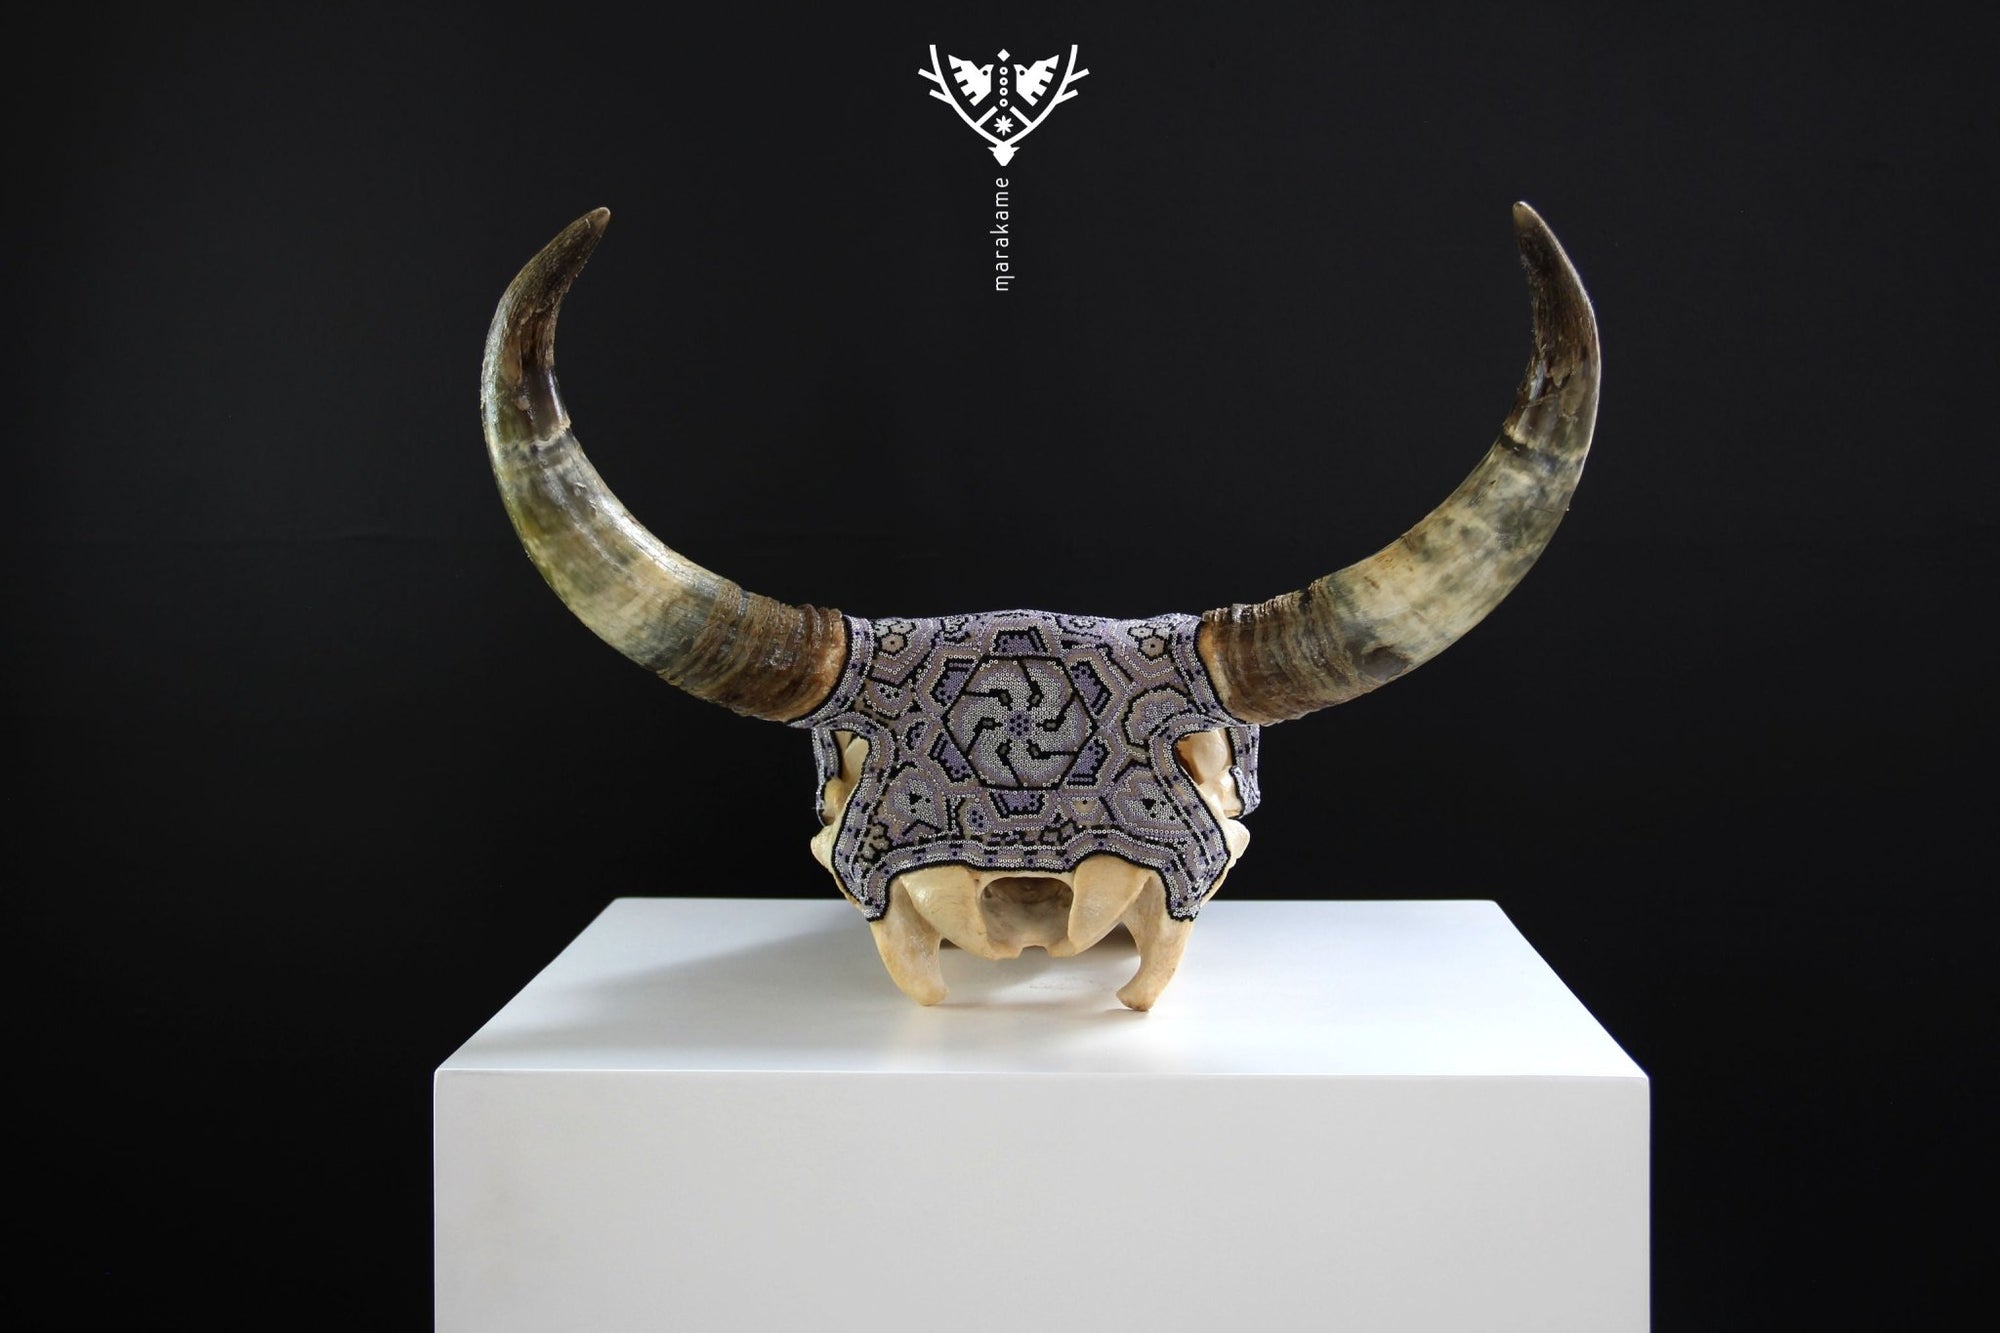 Cow Skull Huichol Art - Tamatsi Kauyumari - Huichol Art - Marakame